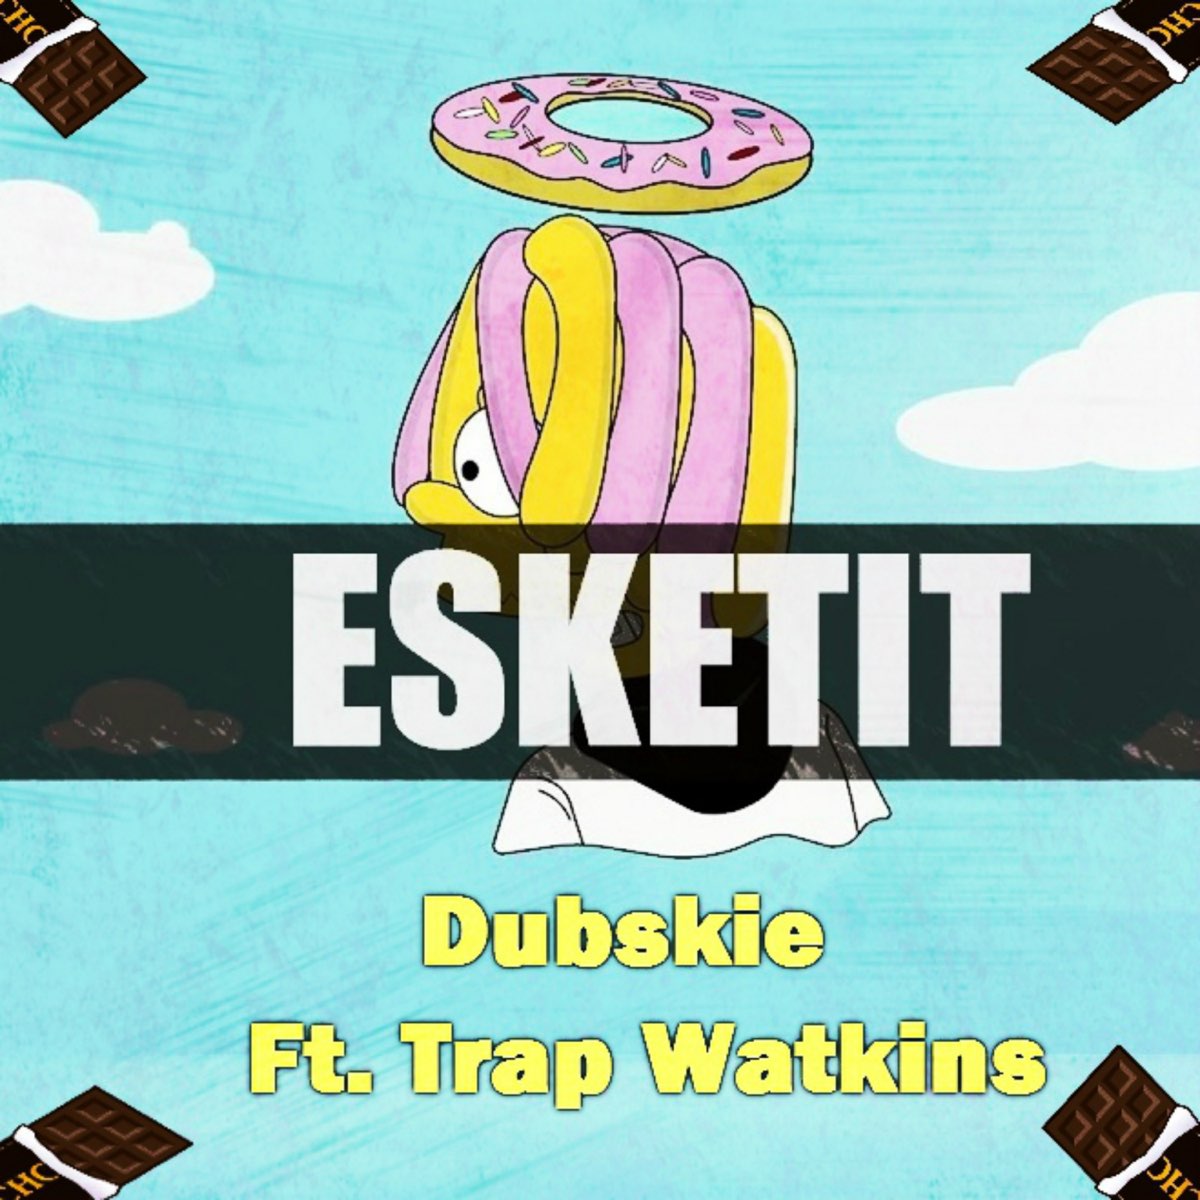 Esketit Feelin Like I M Lil Pump Feat Trap Watkins Single By Dubskie On Apple Music - roblox id esketit lil pump song